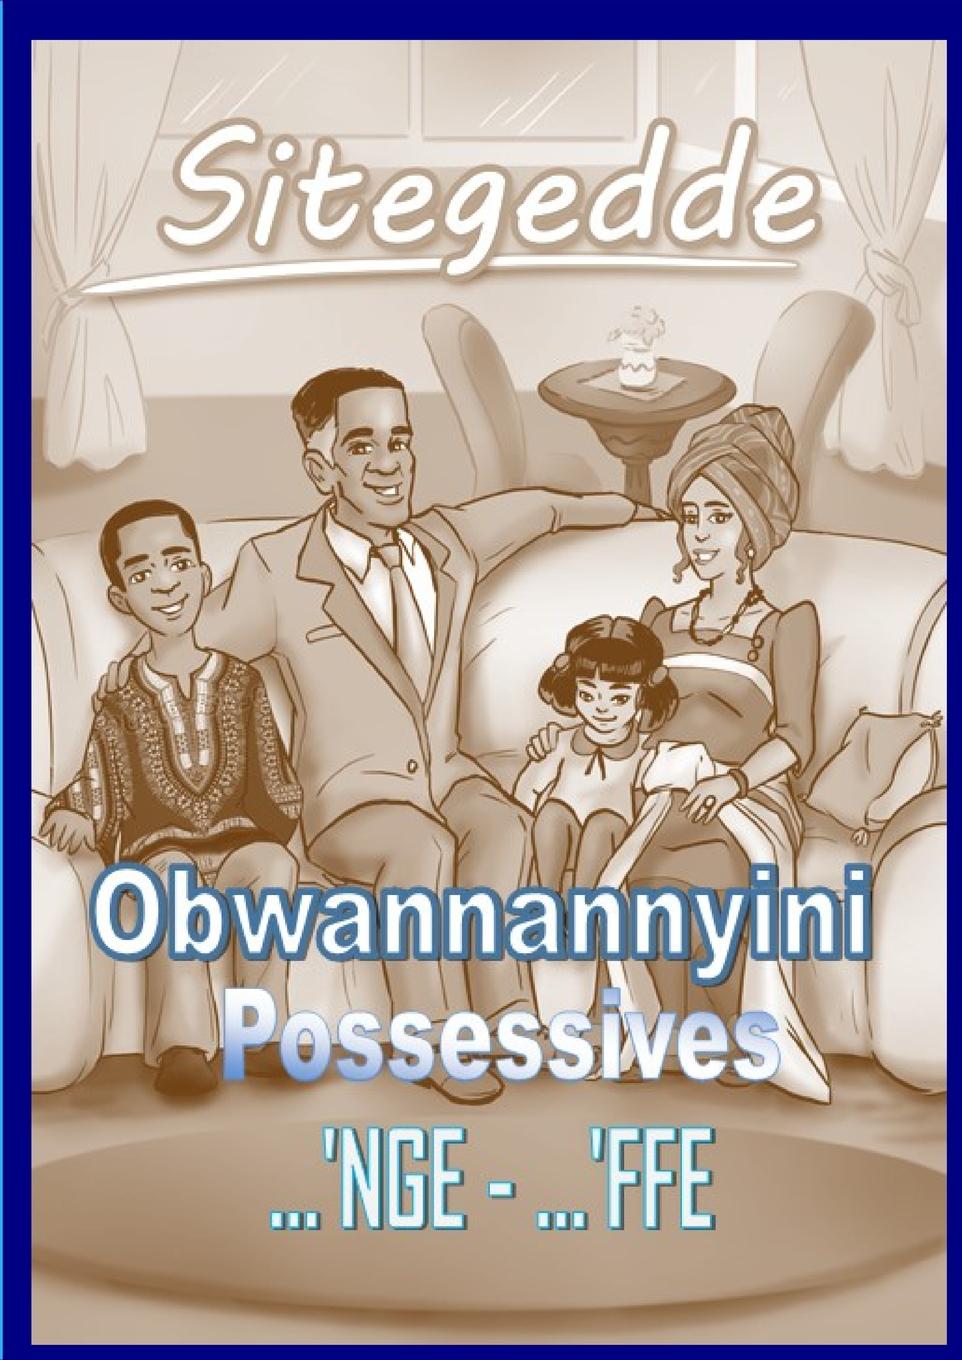 Carte Sitegedde - Luganda Possesives and Pronouns, 